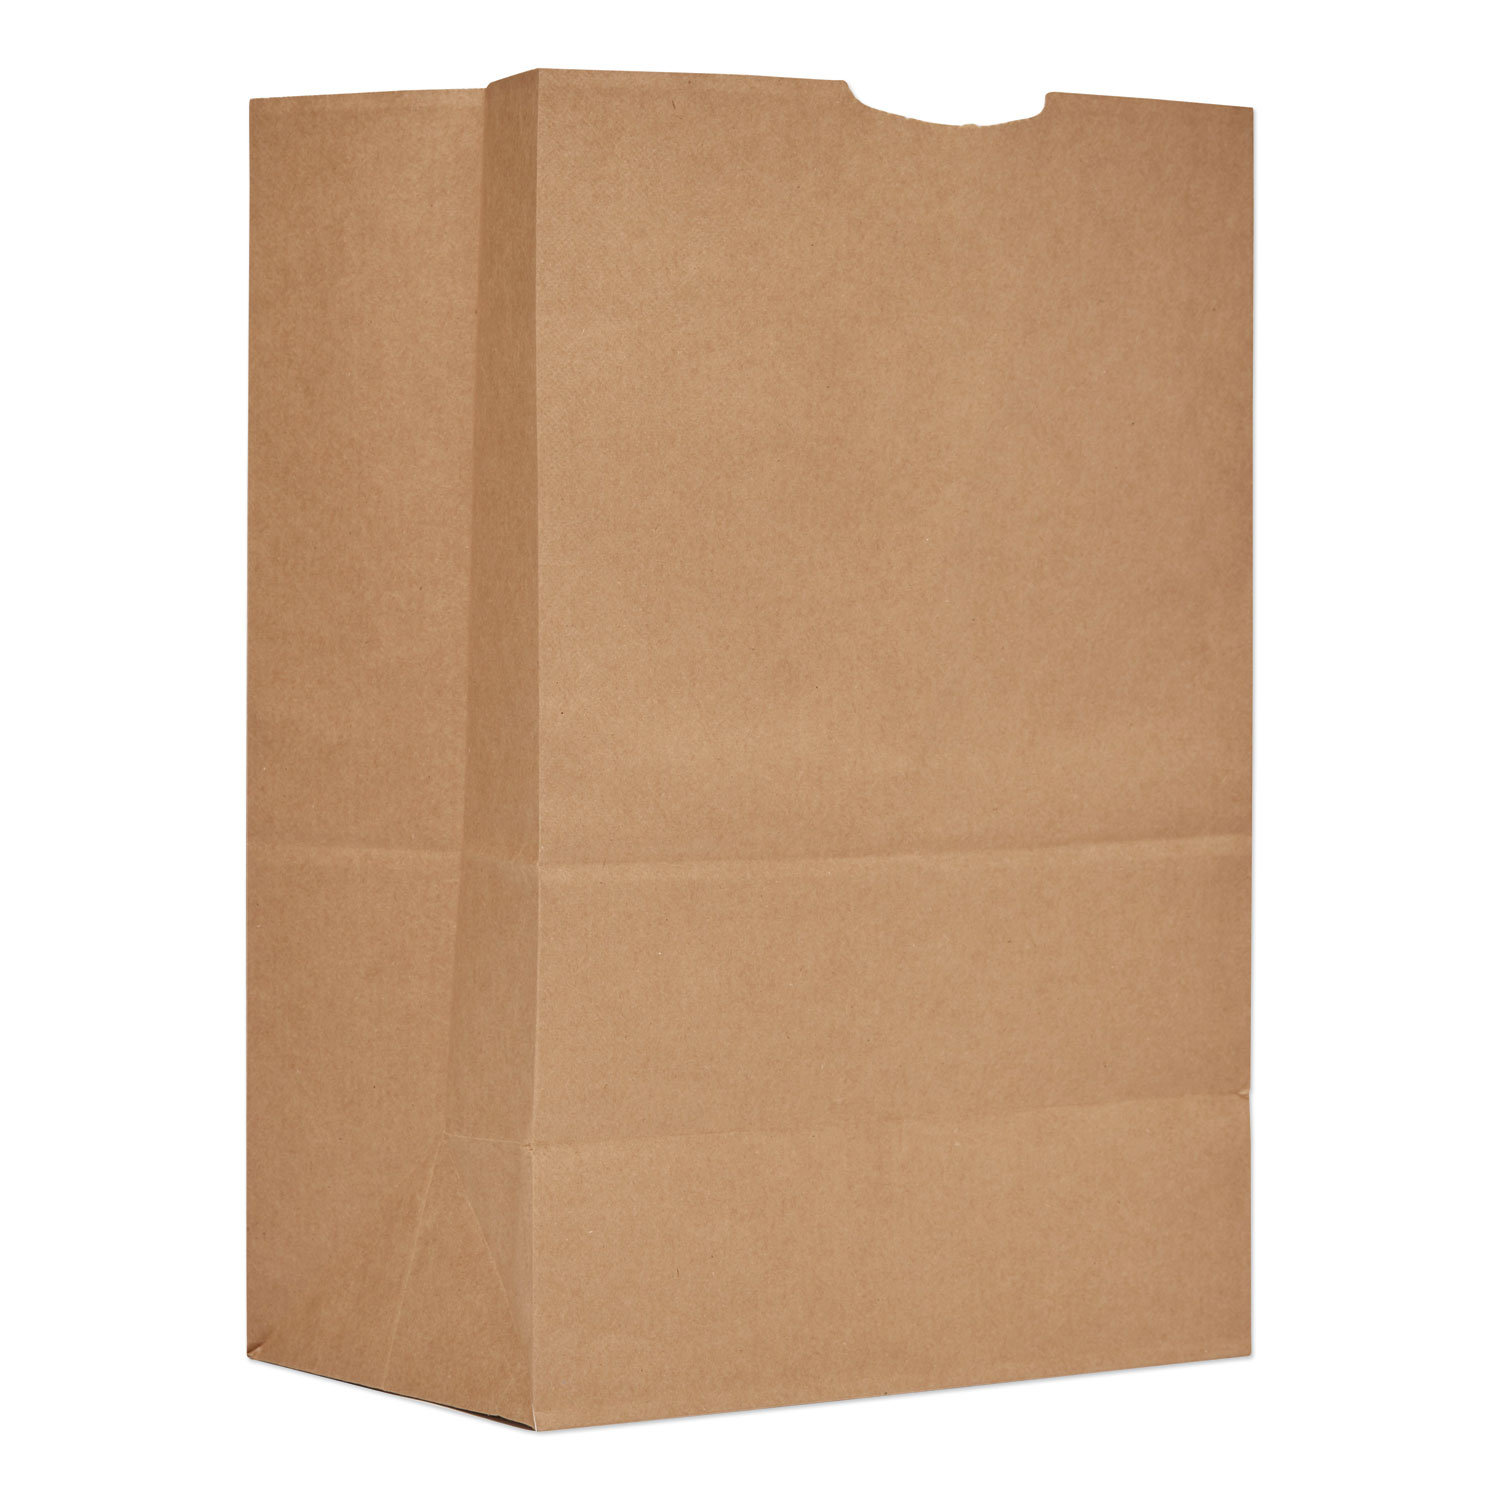  General 80075 Grocery Paper Bags, 52 lbs Capacity, 1/6 BBL, 12w x 7d x 17h, Kraft, 500 Bags (BAGSK1652) 